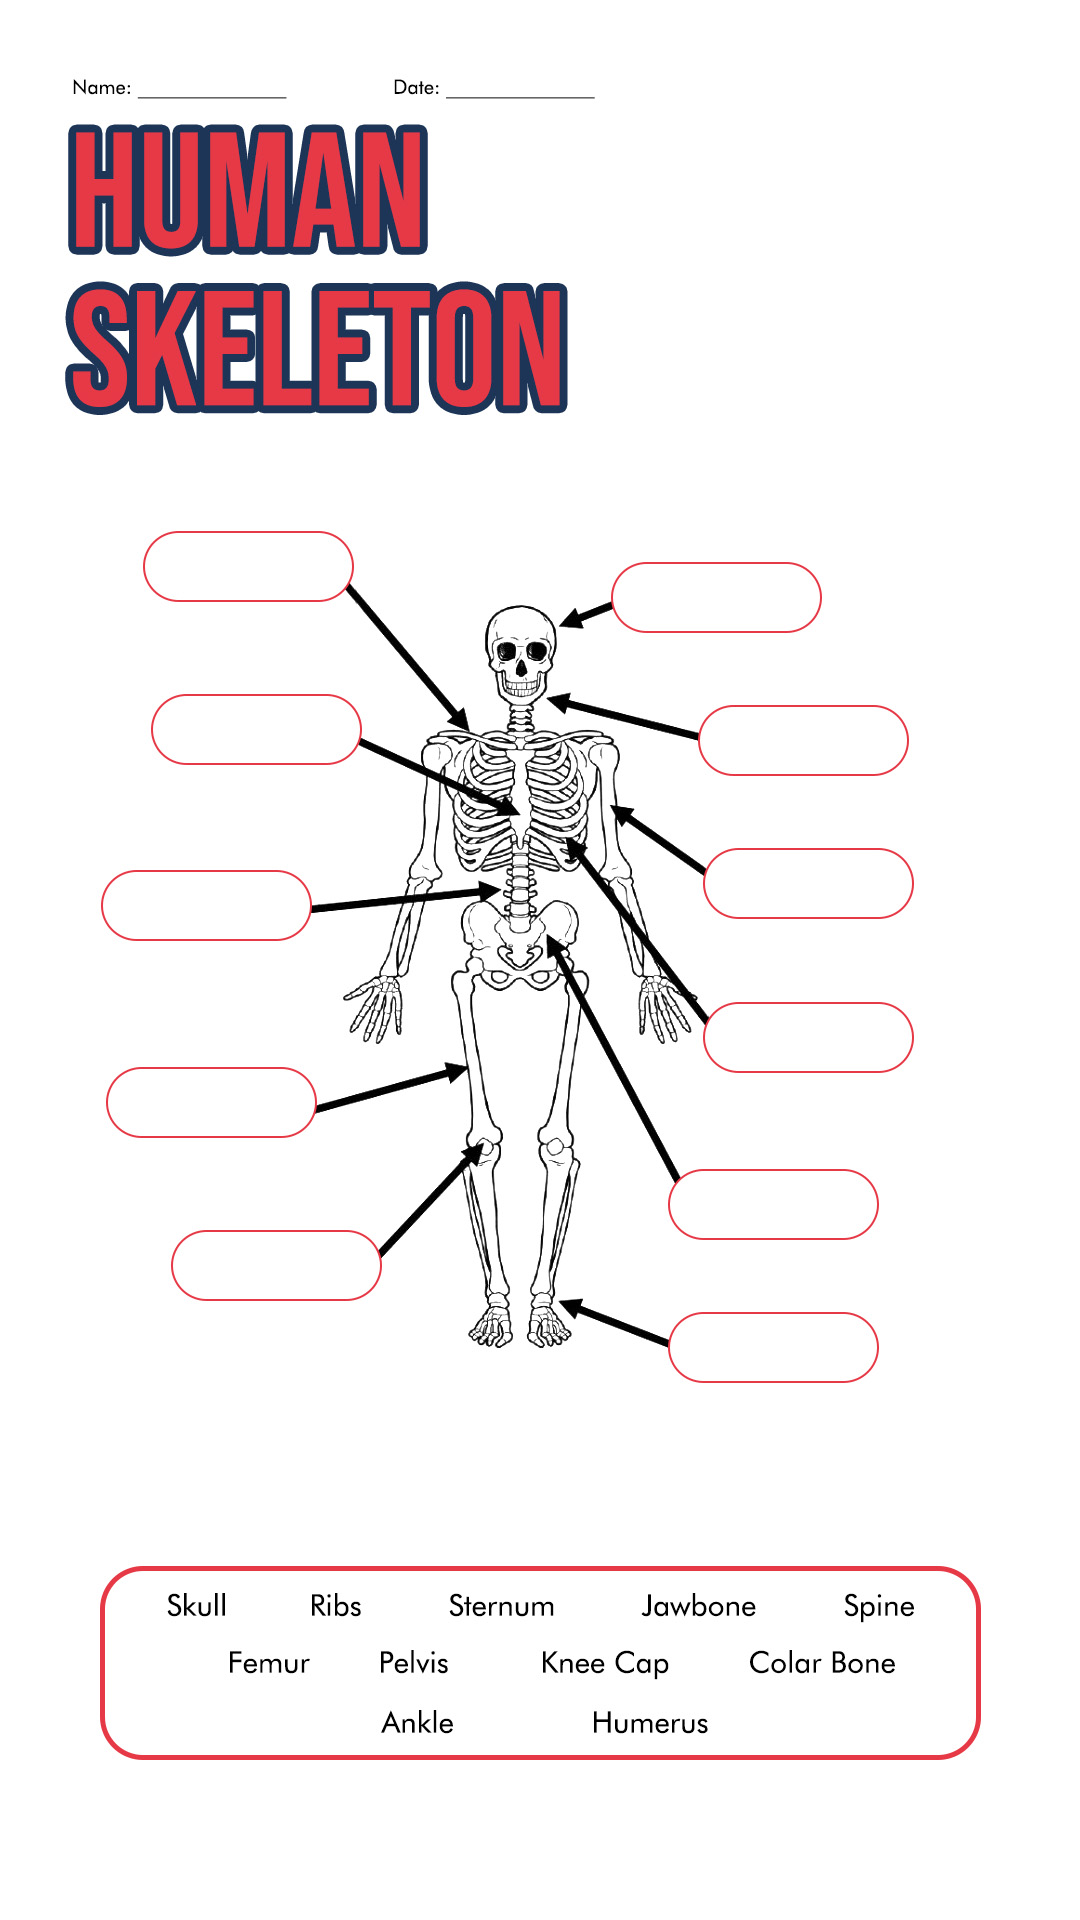 Human Skeleton Printable Worksheets Image